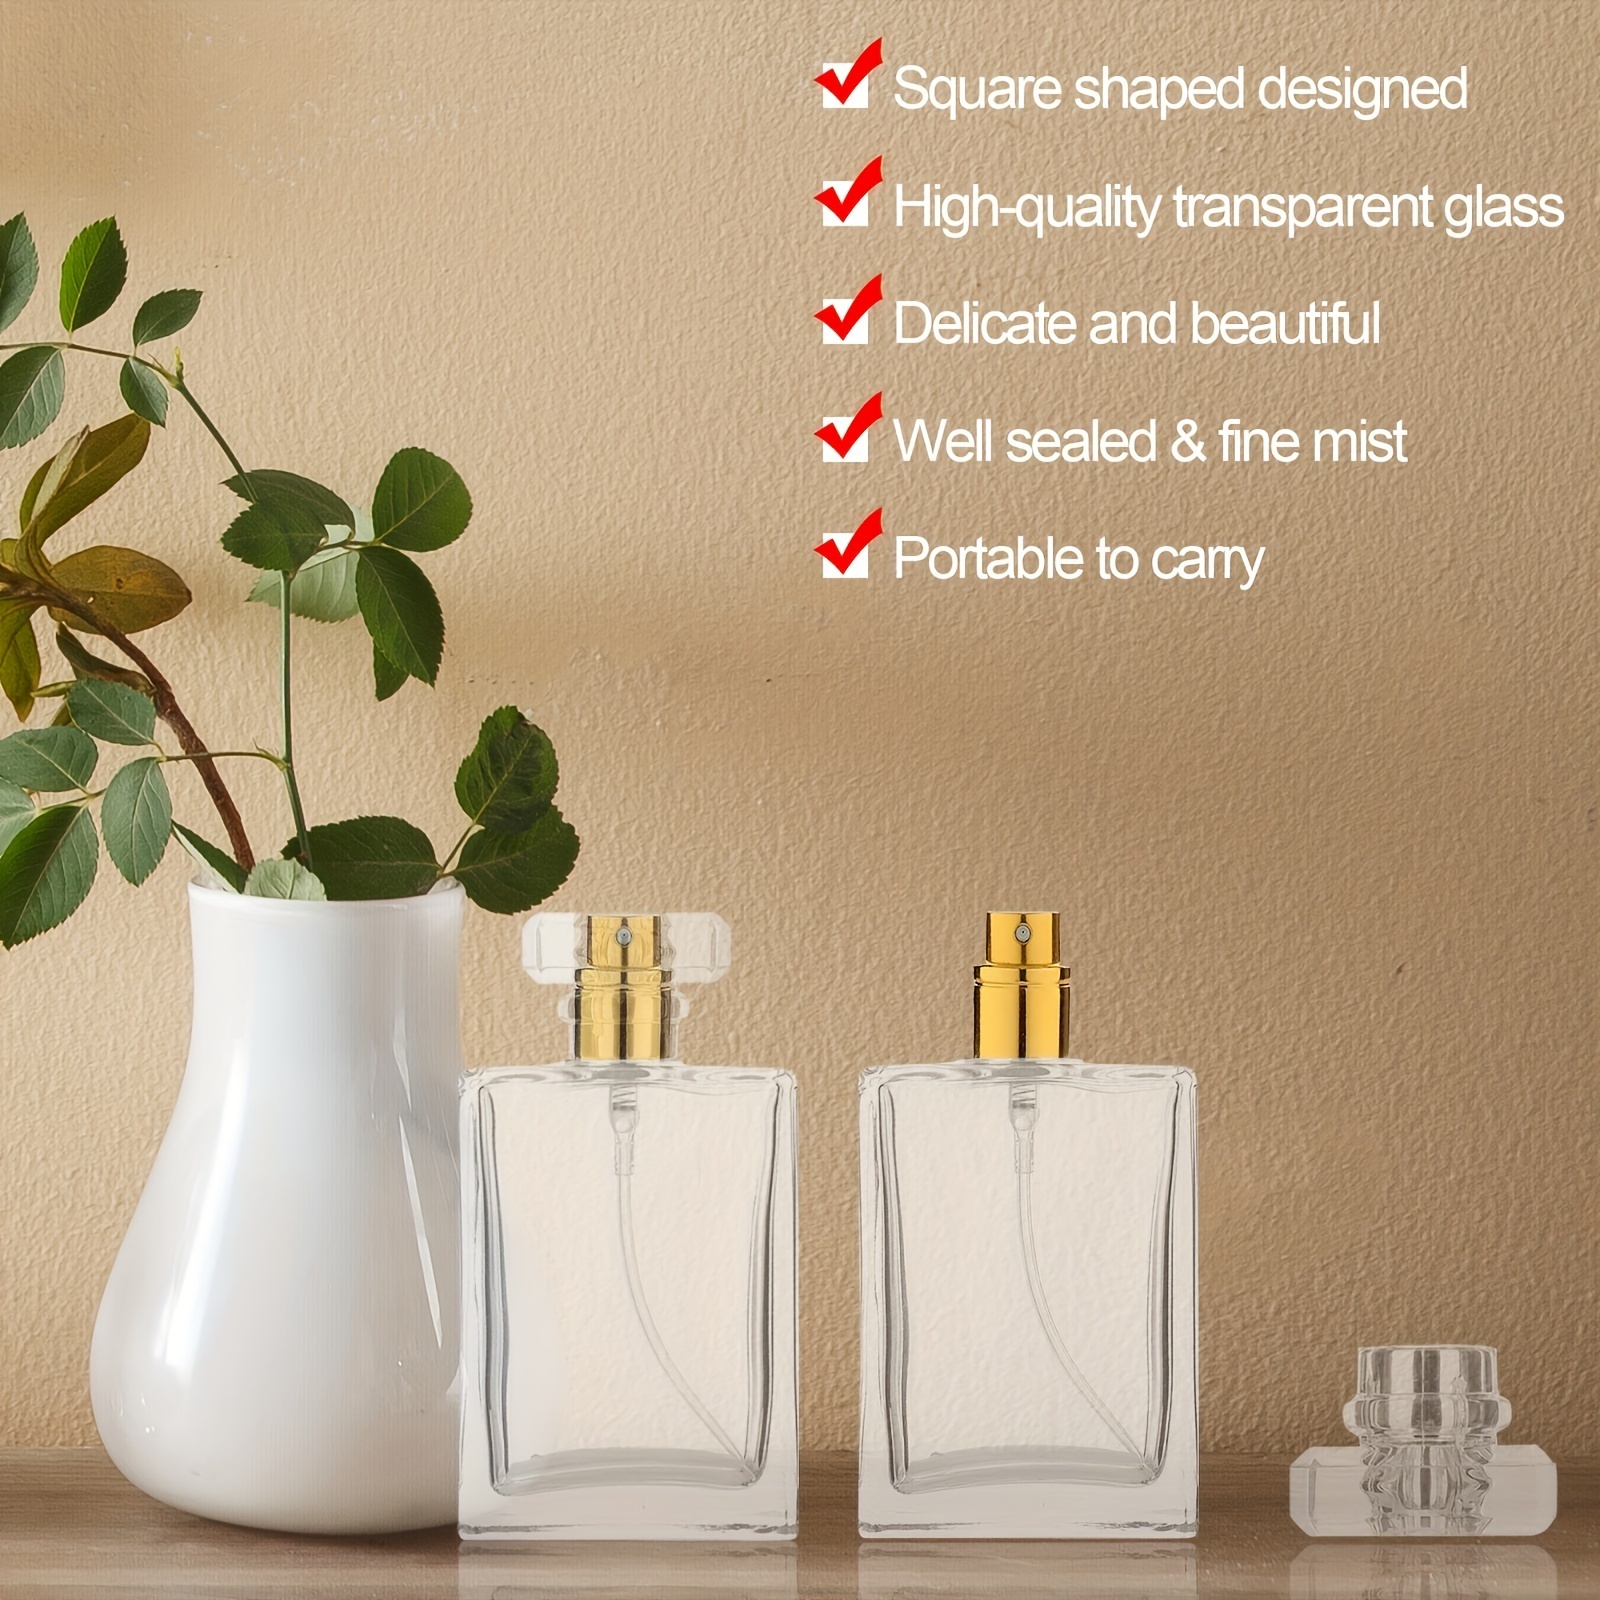 Design Perfume Glass Bottle by iPerfume Packaging